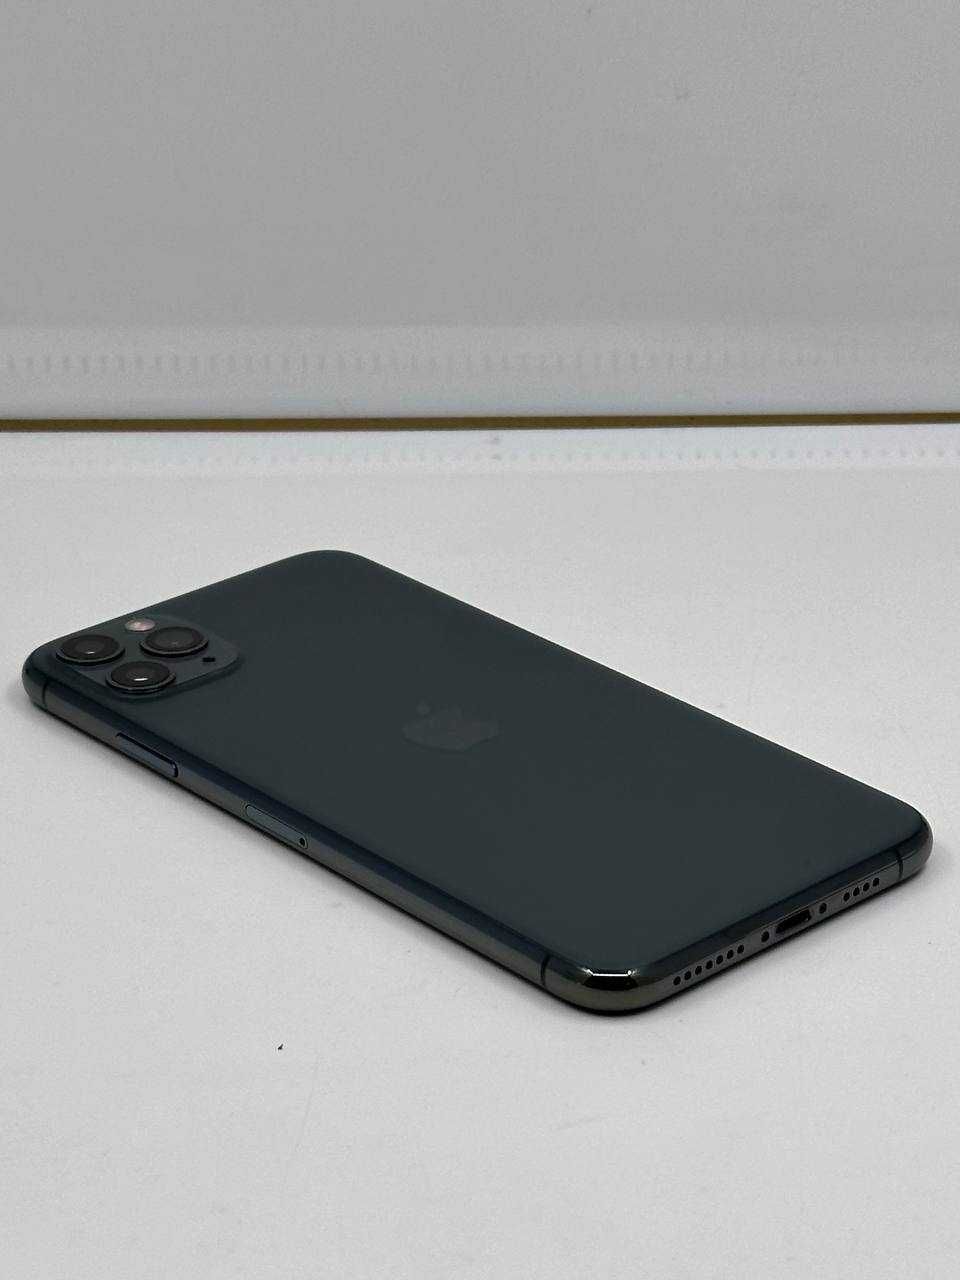 iPhone 11 Pro Max 512Gb Midnight Green Neverlock 6 Месяцев ГАРАНТИЯ